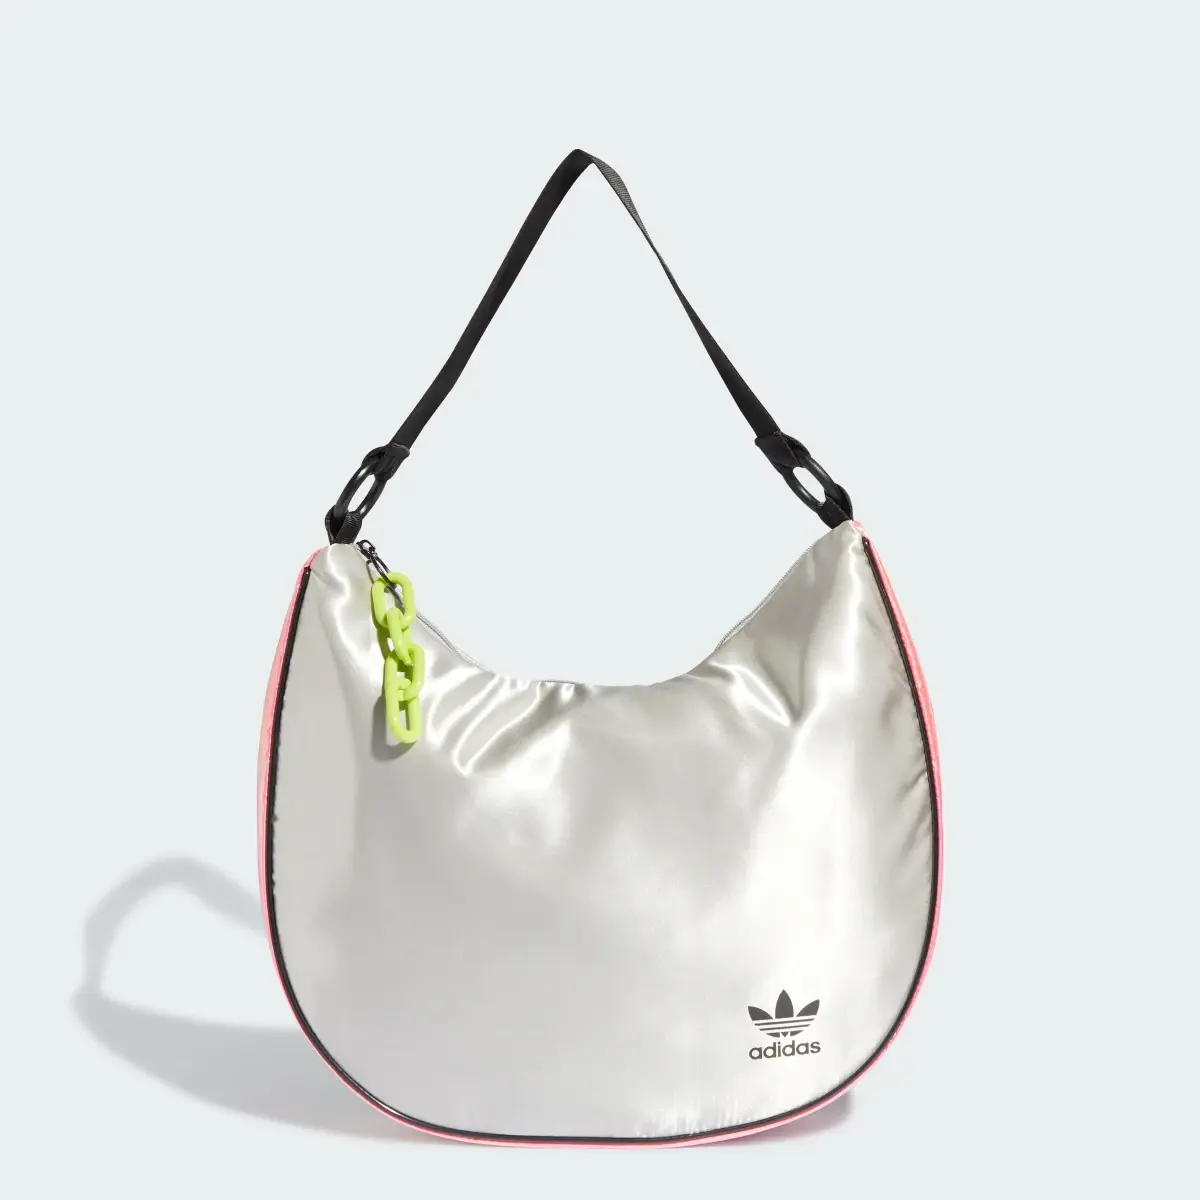 Adidas Metamoto Shoulder Bag. 1